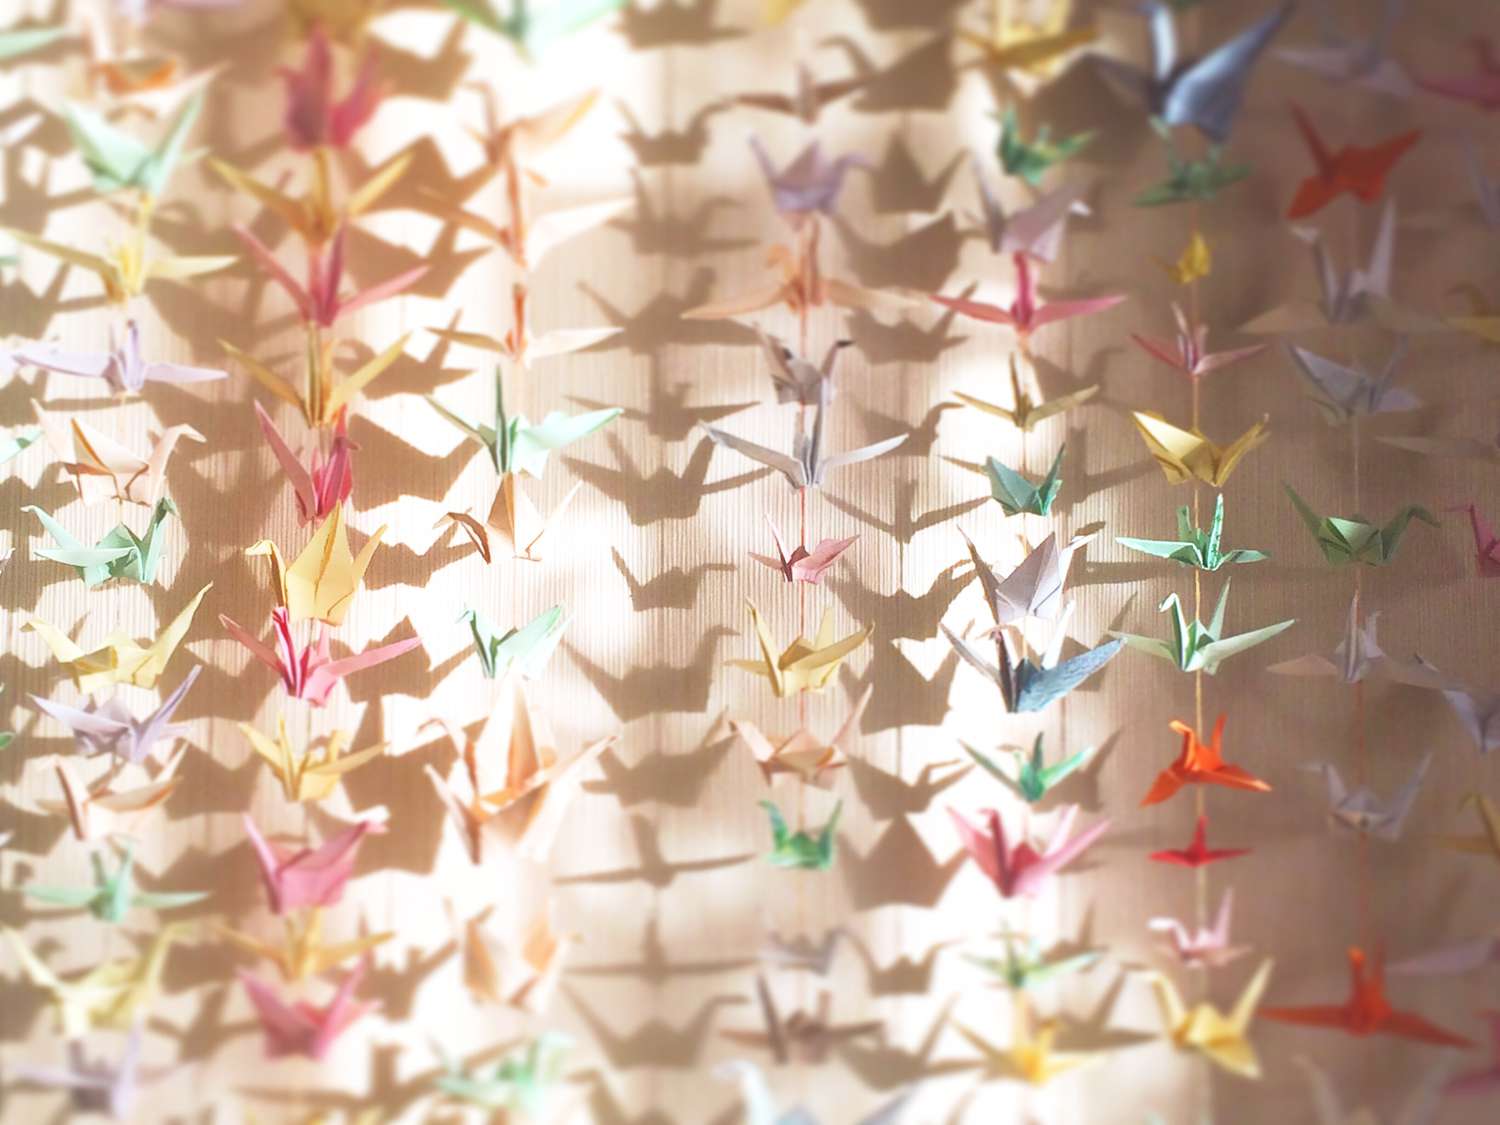 strings of origami cranes